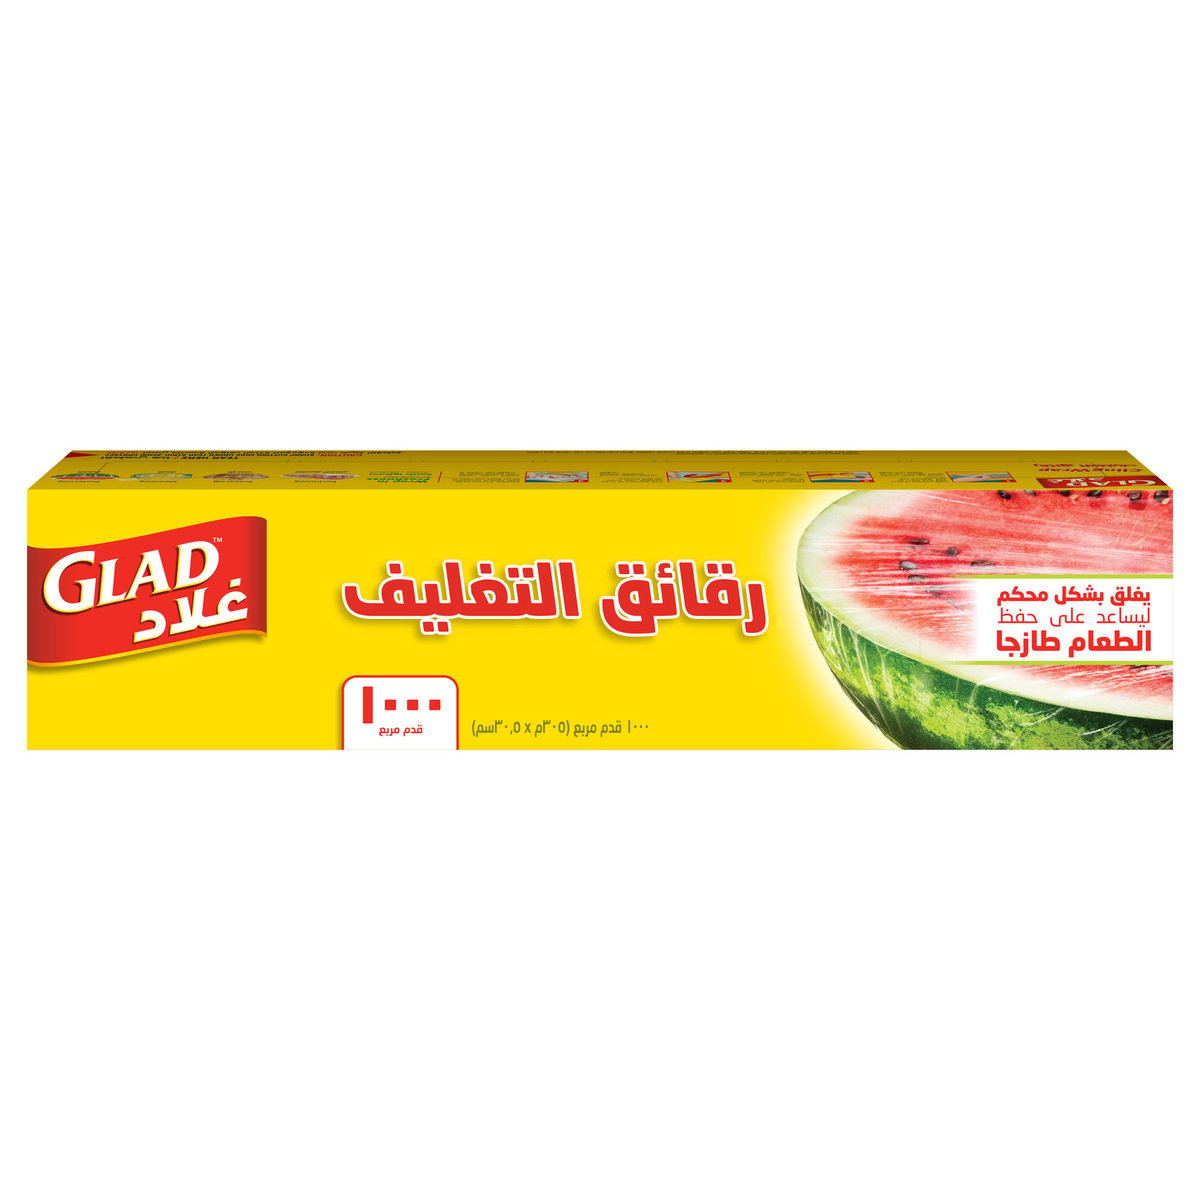 Glad Cling Wrap Clear Plastic Loop 1000 sq. ft. Size 305m x 30.5cm 1pc